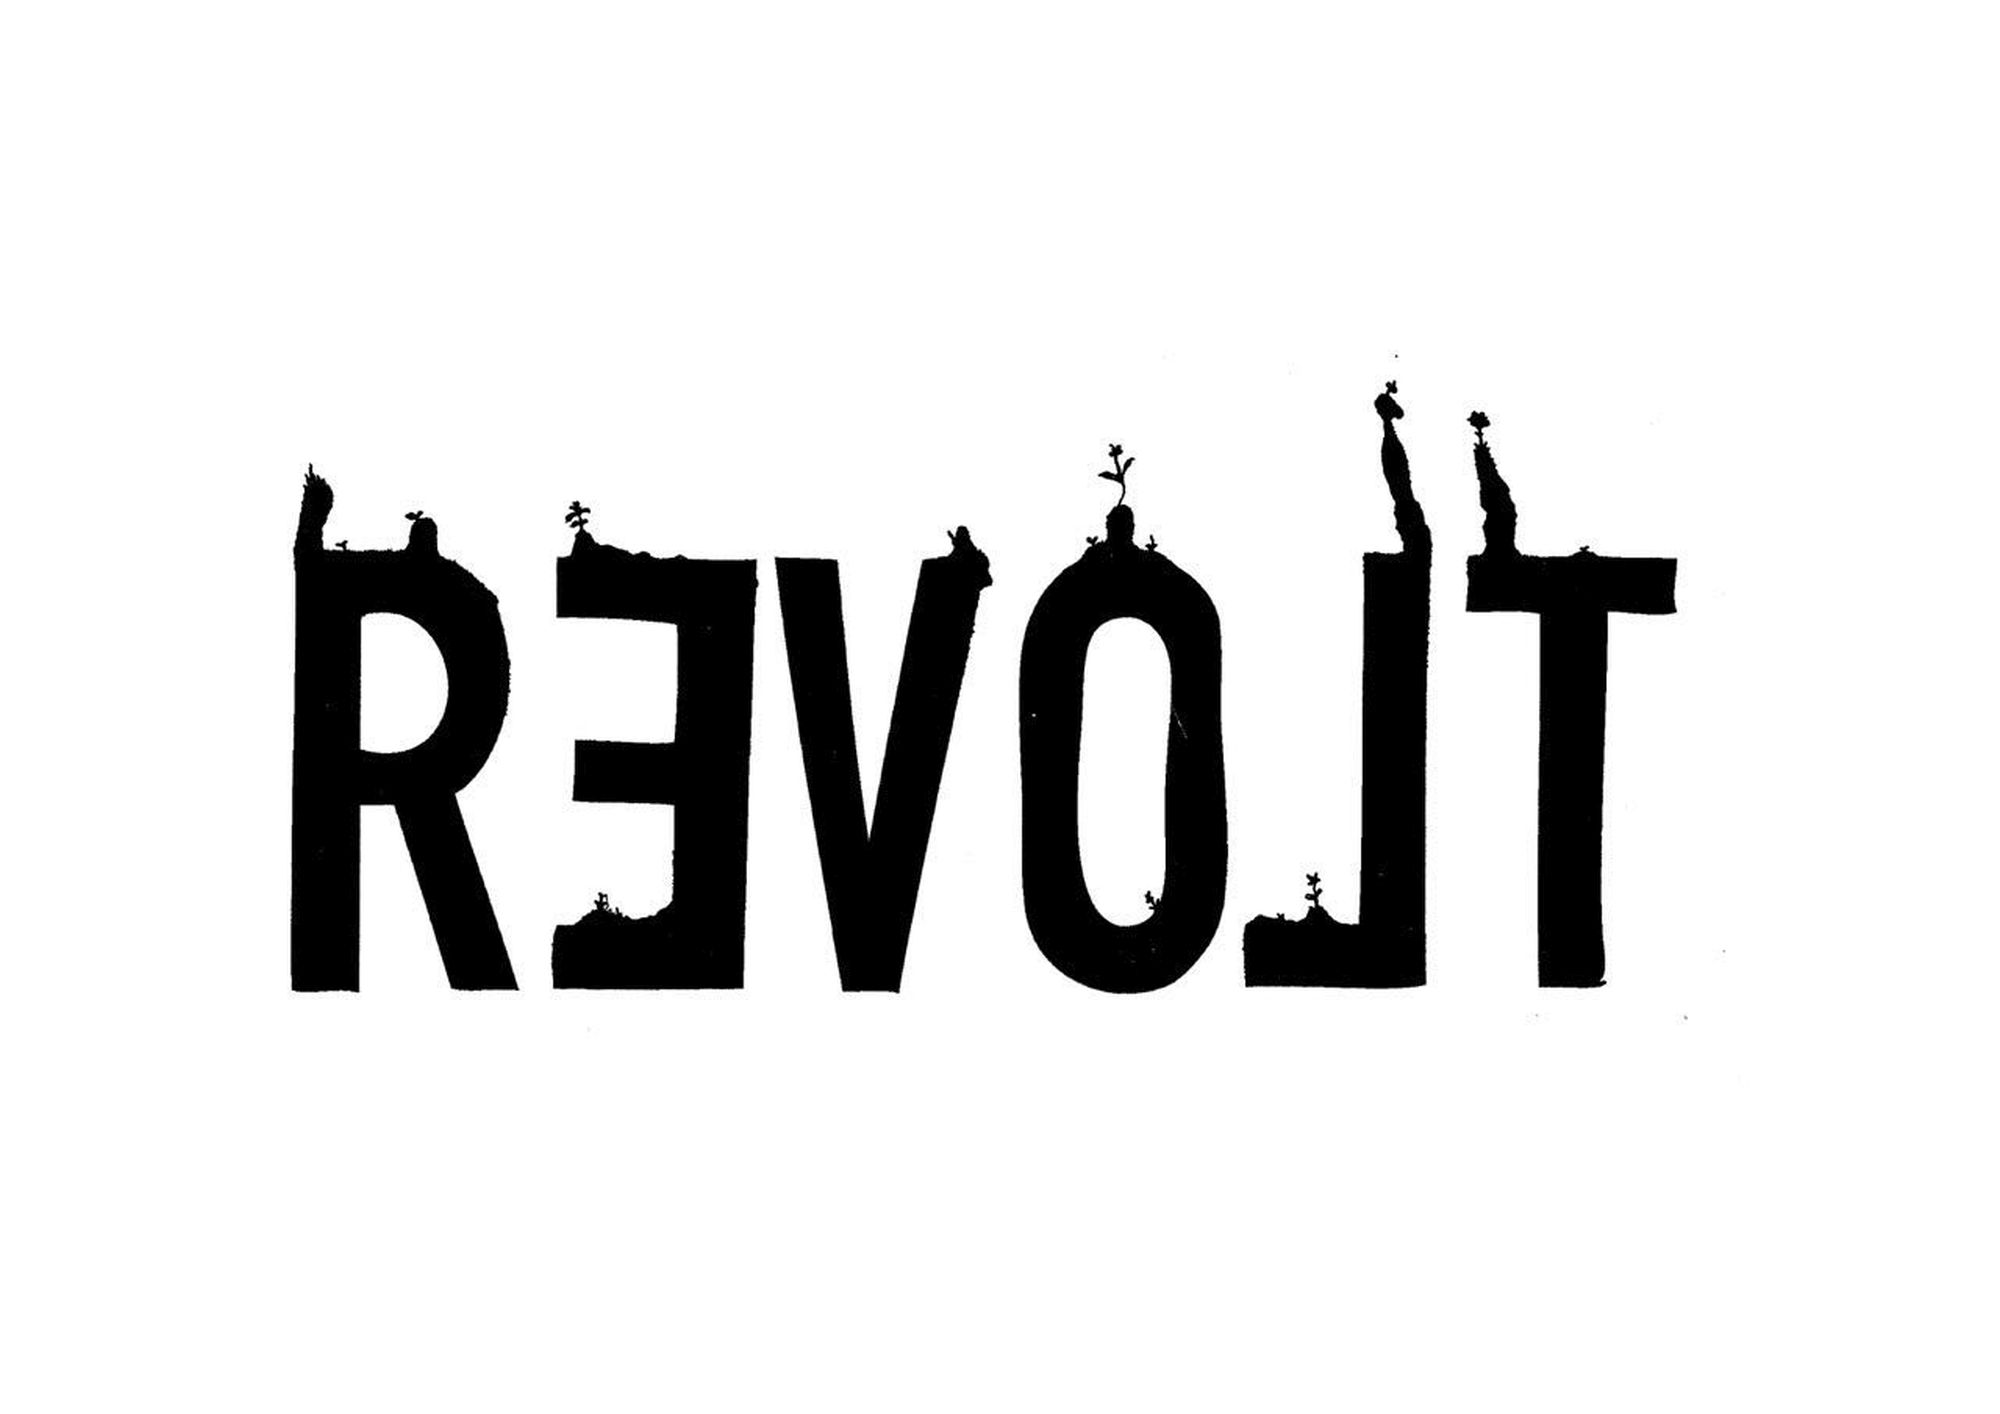 images/archief/revolt/logo-revolt-wit.jpg#joomlaImage://local-images/archief/revolt/logo-revolt-wit.jpg?width=2000&height=1414